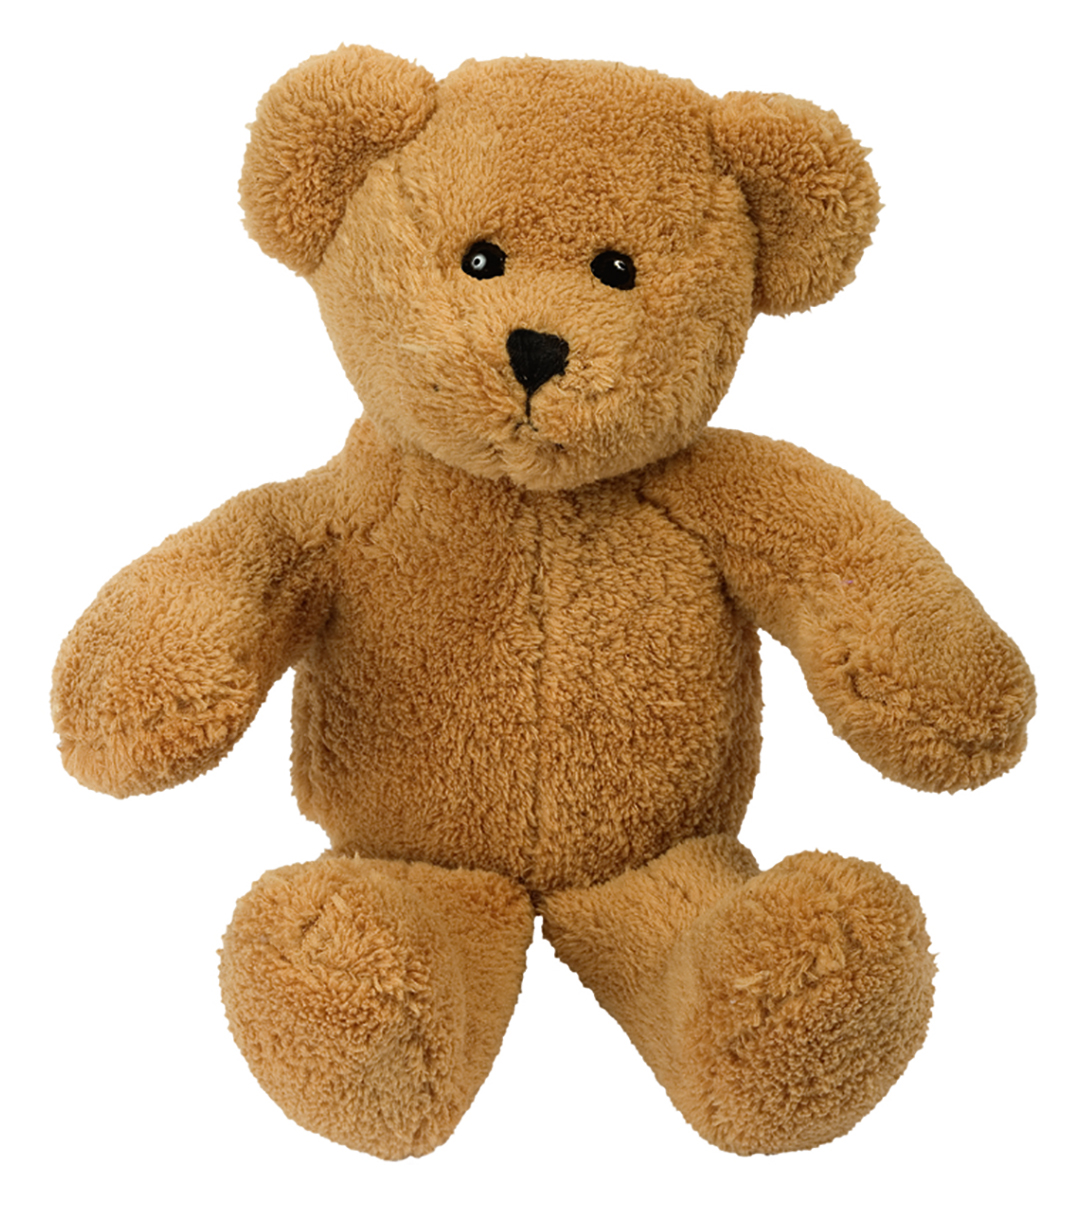 Michael softplush teddy